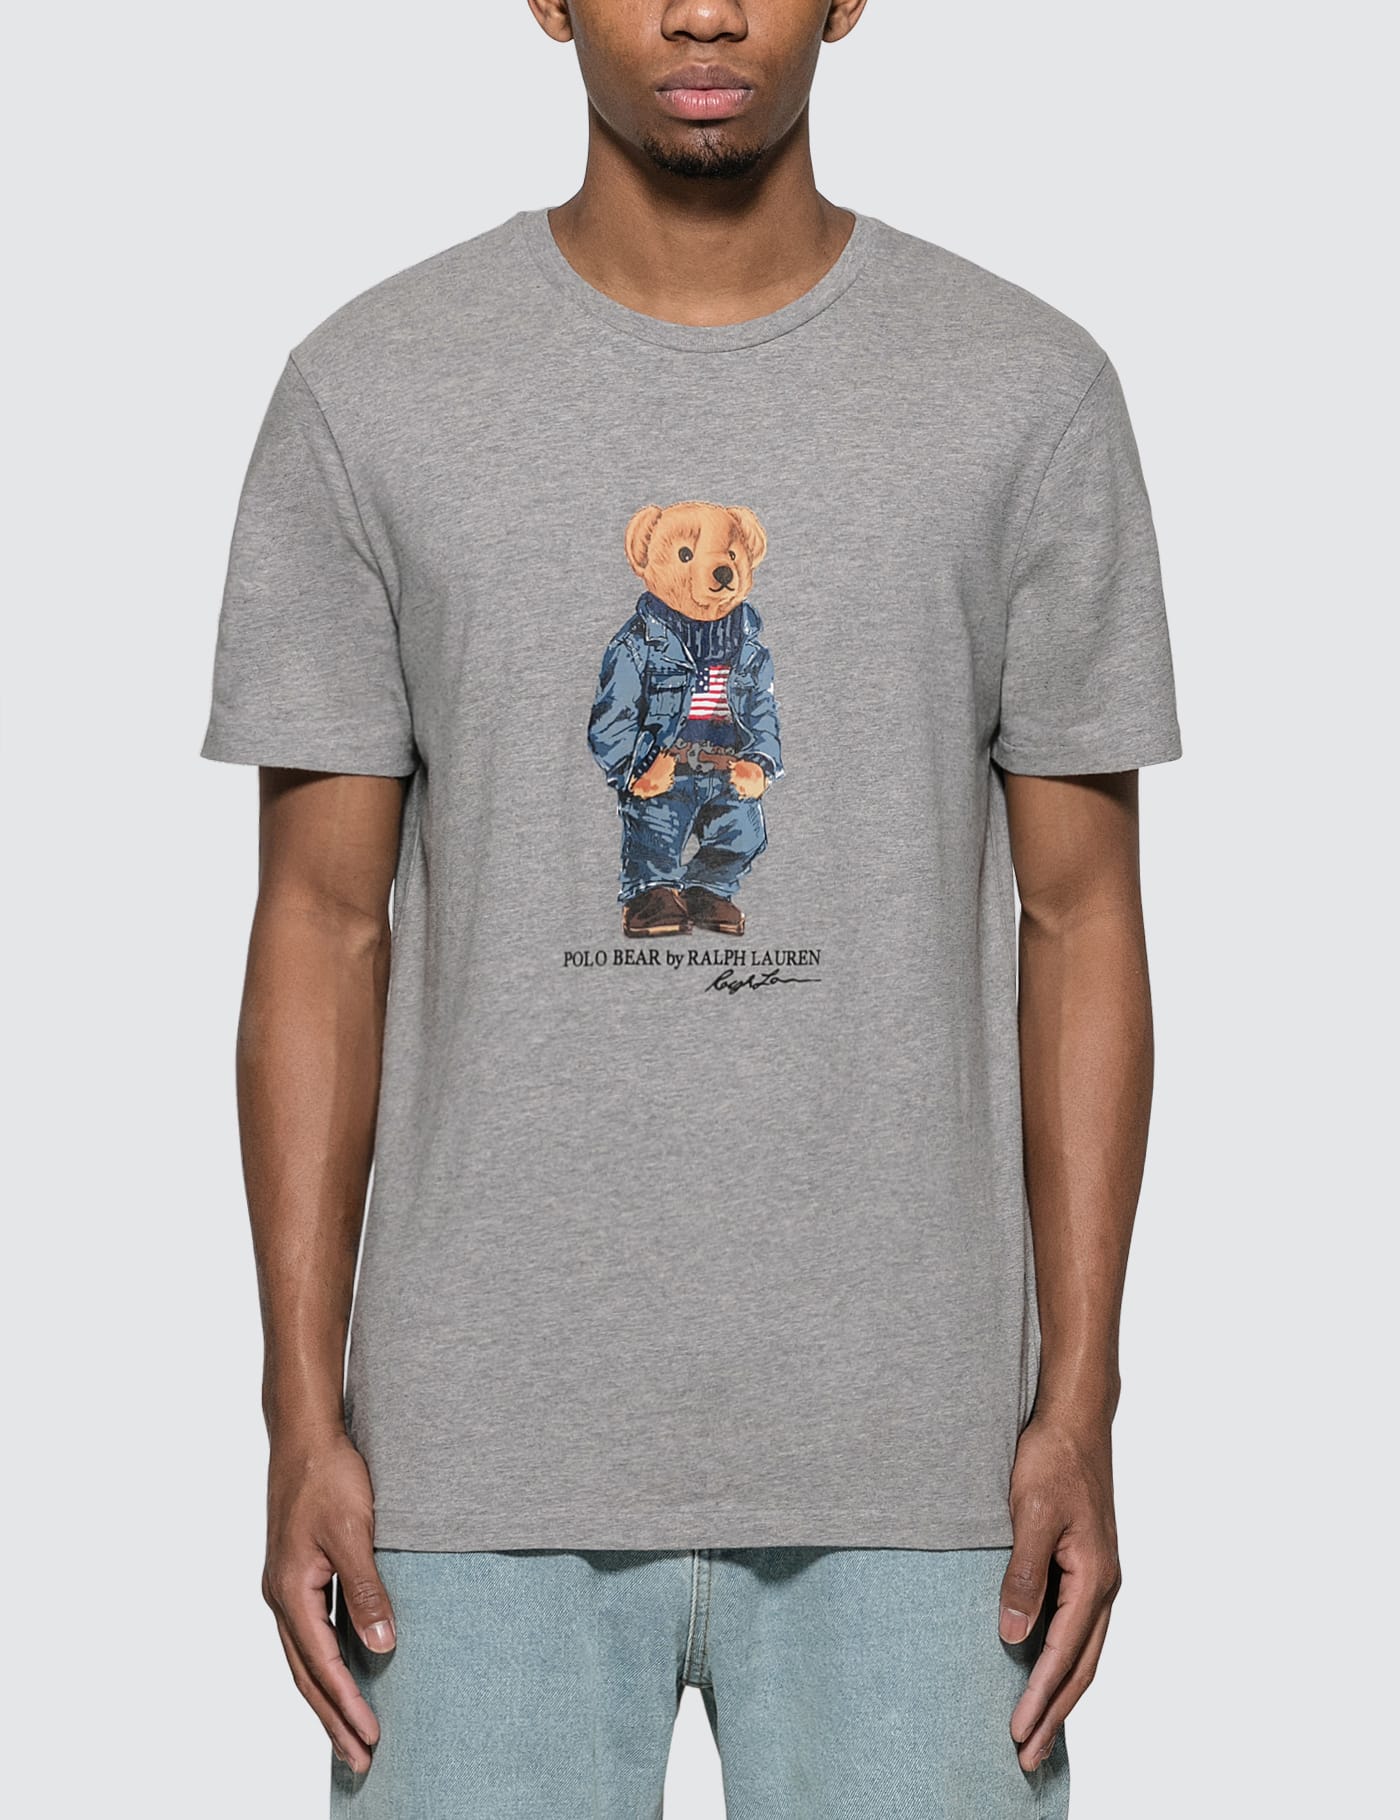 polo t shirts bear,yasserchemicals.com